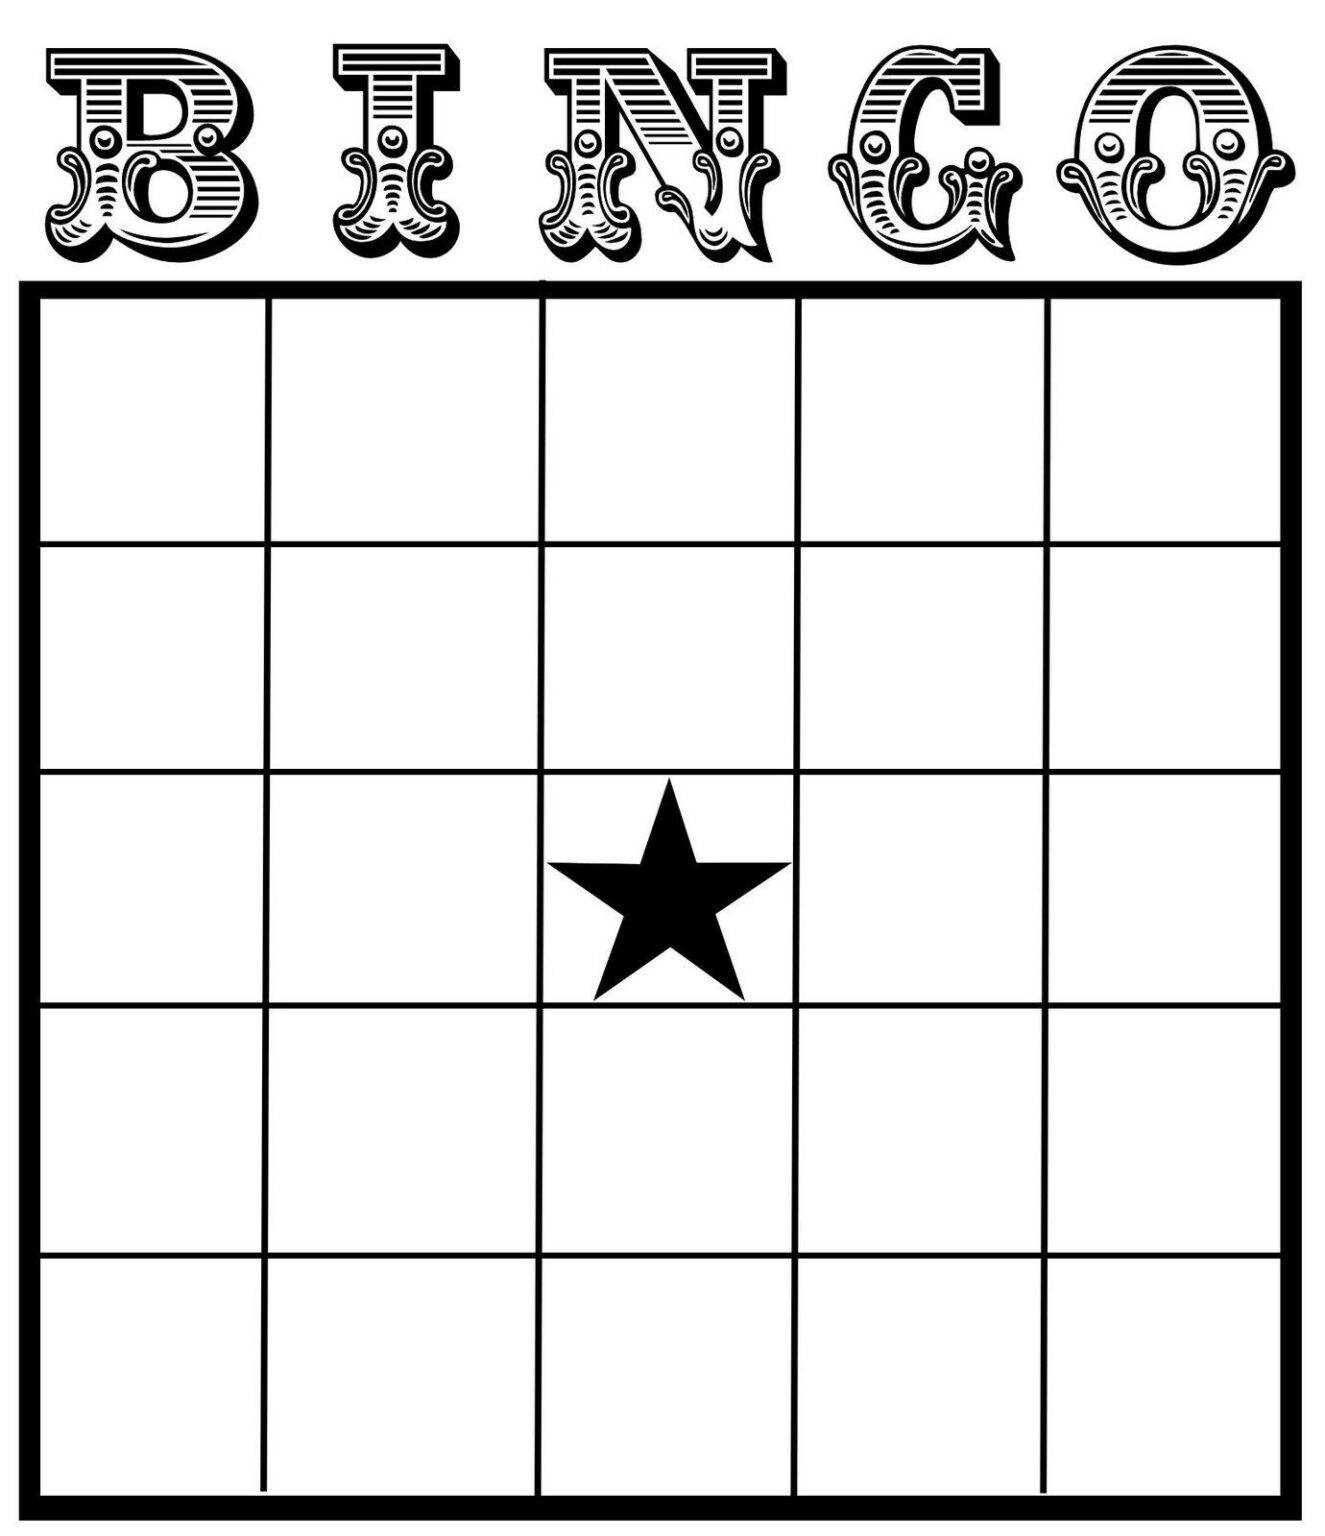 free printable bingo cards blank